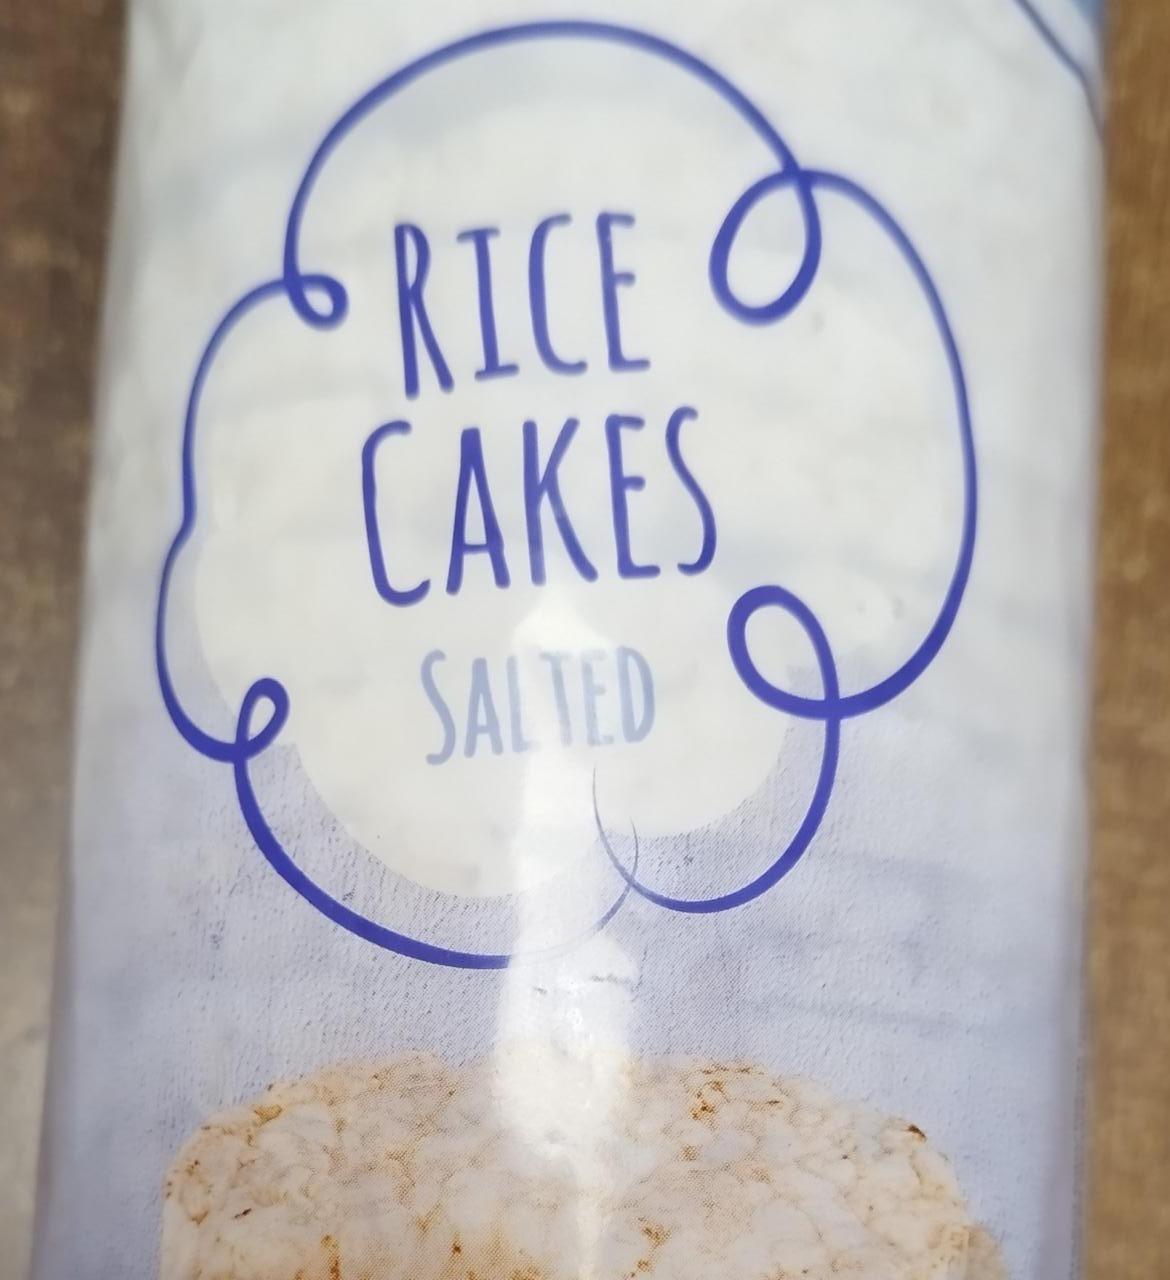 Képek - Rice cakes Salted Sondey